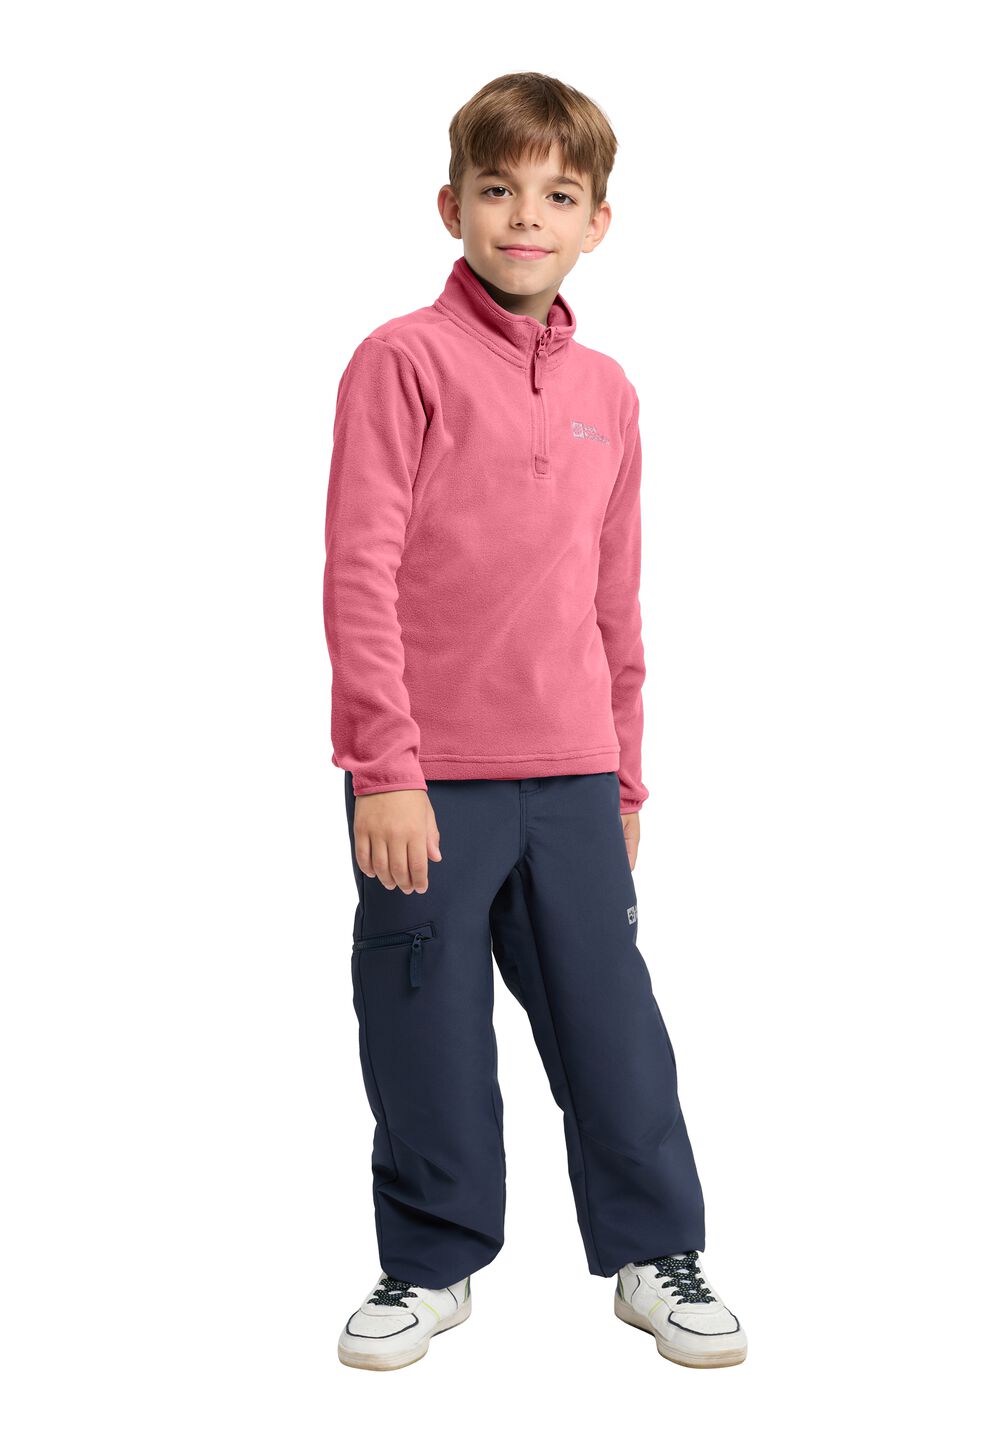 Jack Wolfskin Fleecepullover Kinder Taunus Halfzip Kids 116 soft pink soft pink von Jack Wolfskin